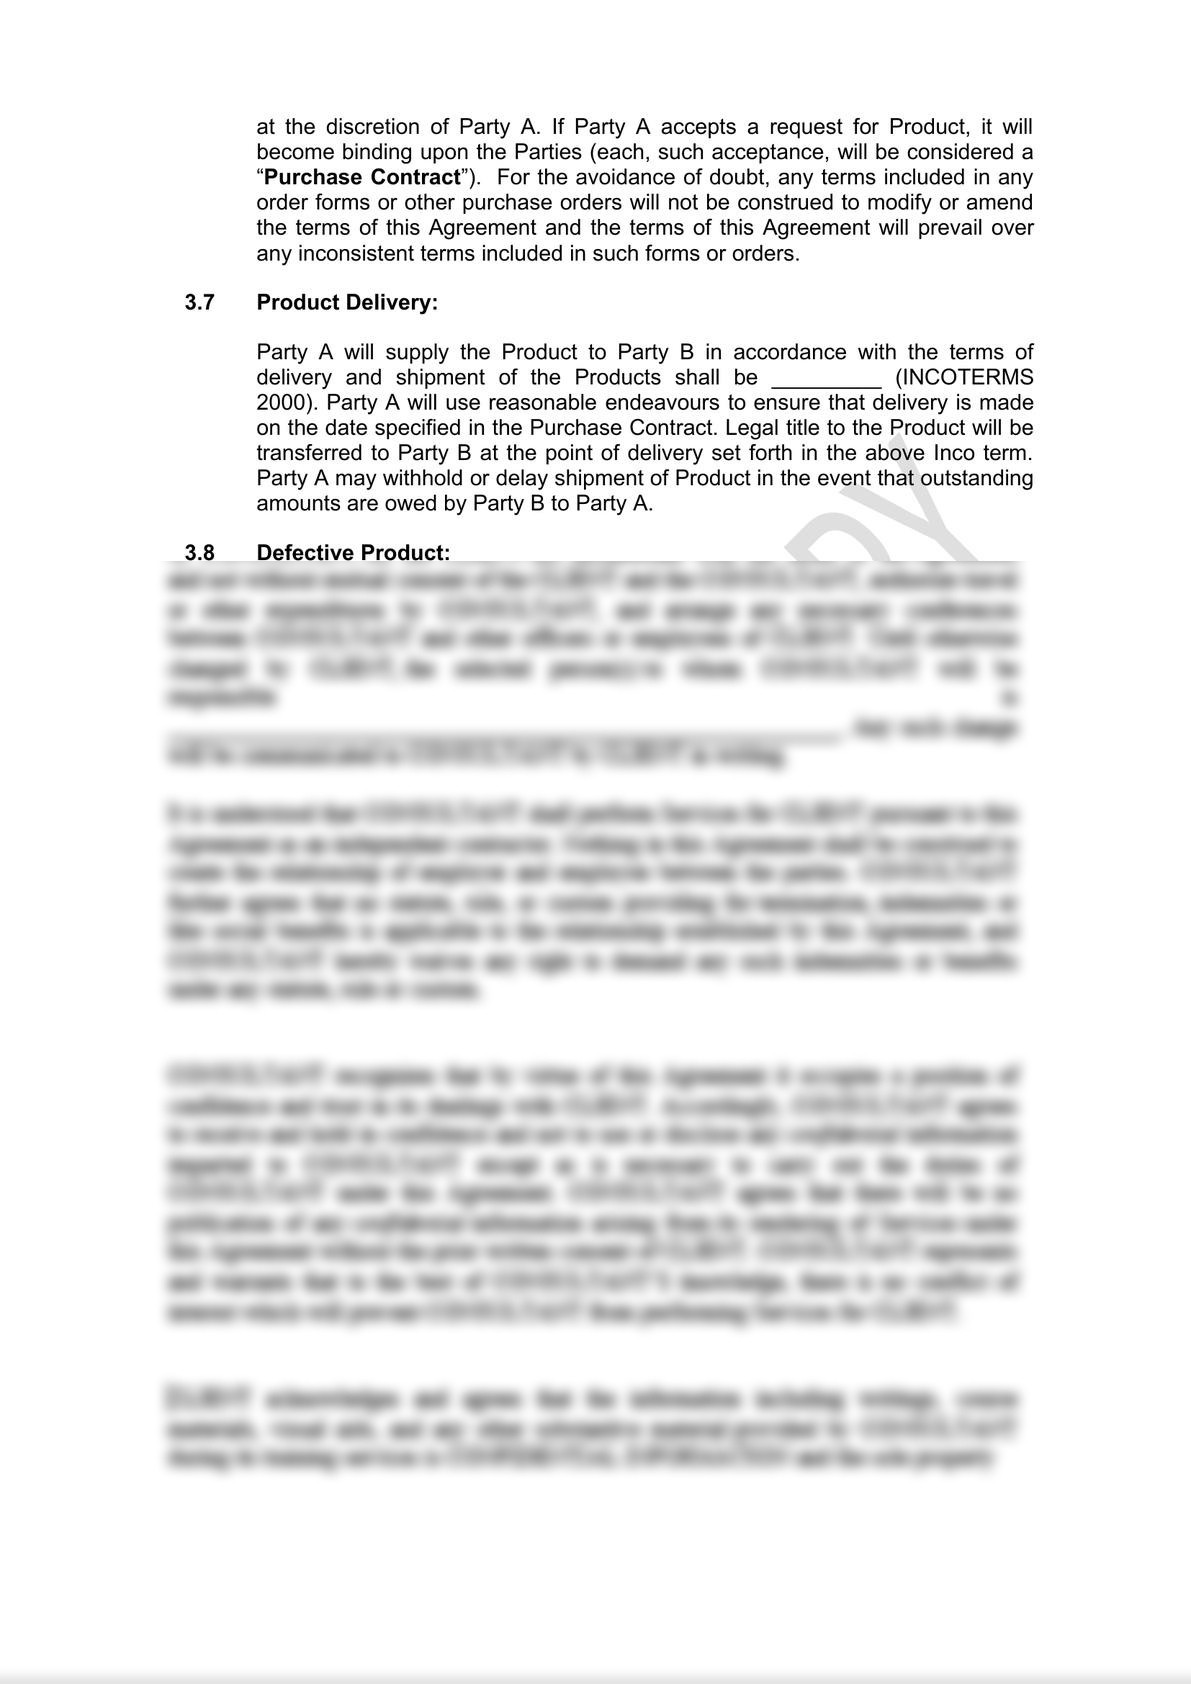 Distribution Agreement Draft -8